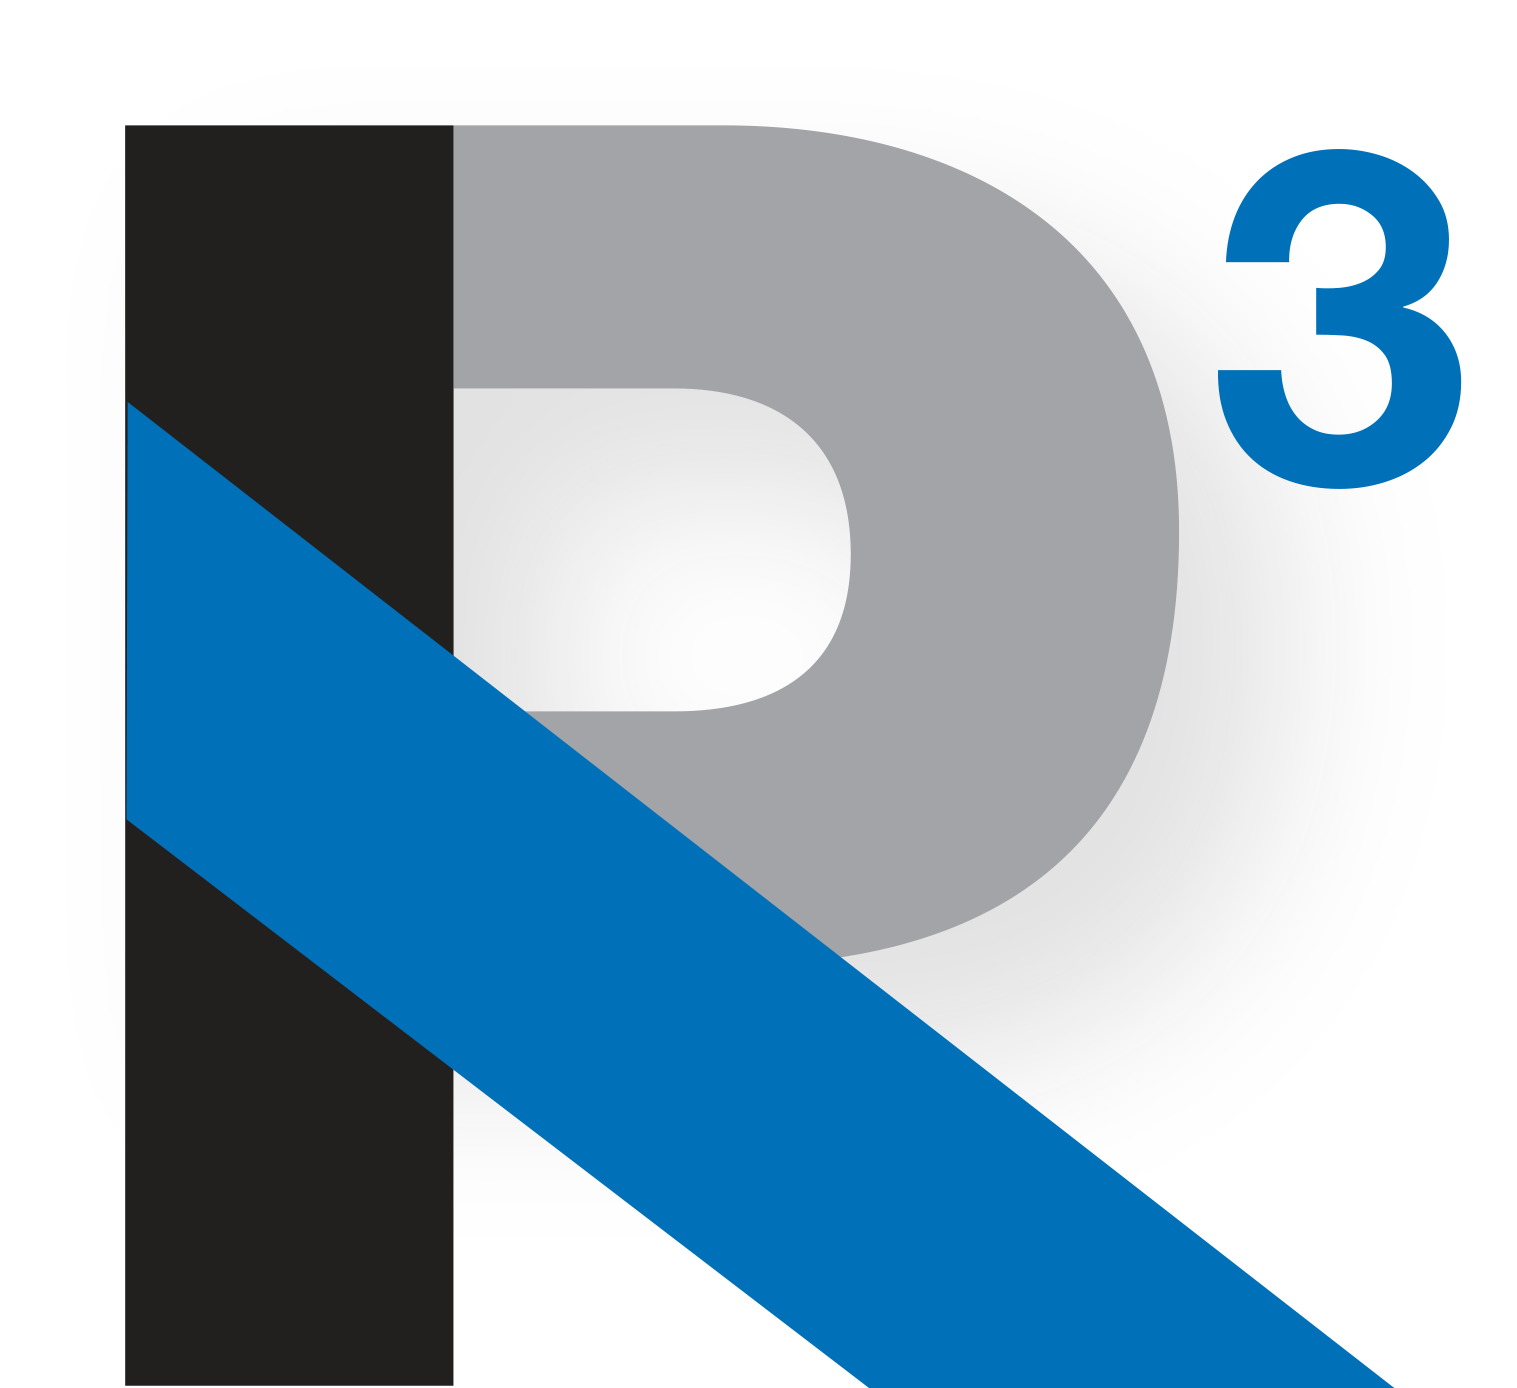 r3 logo